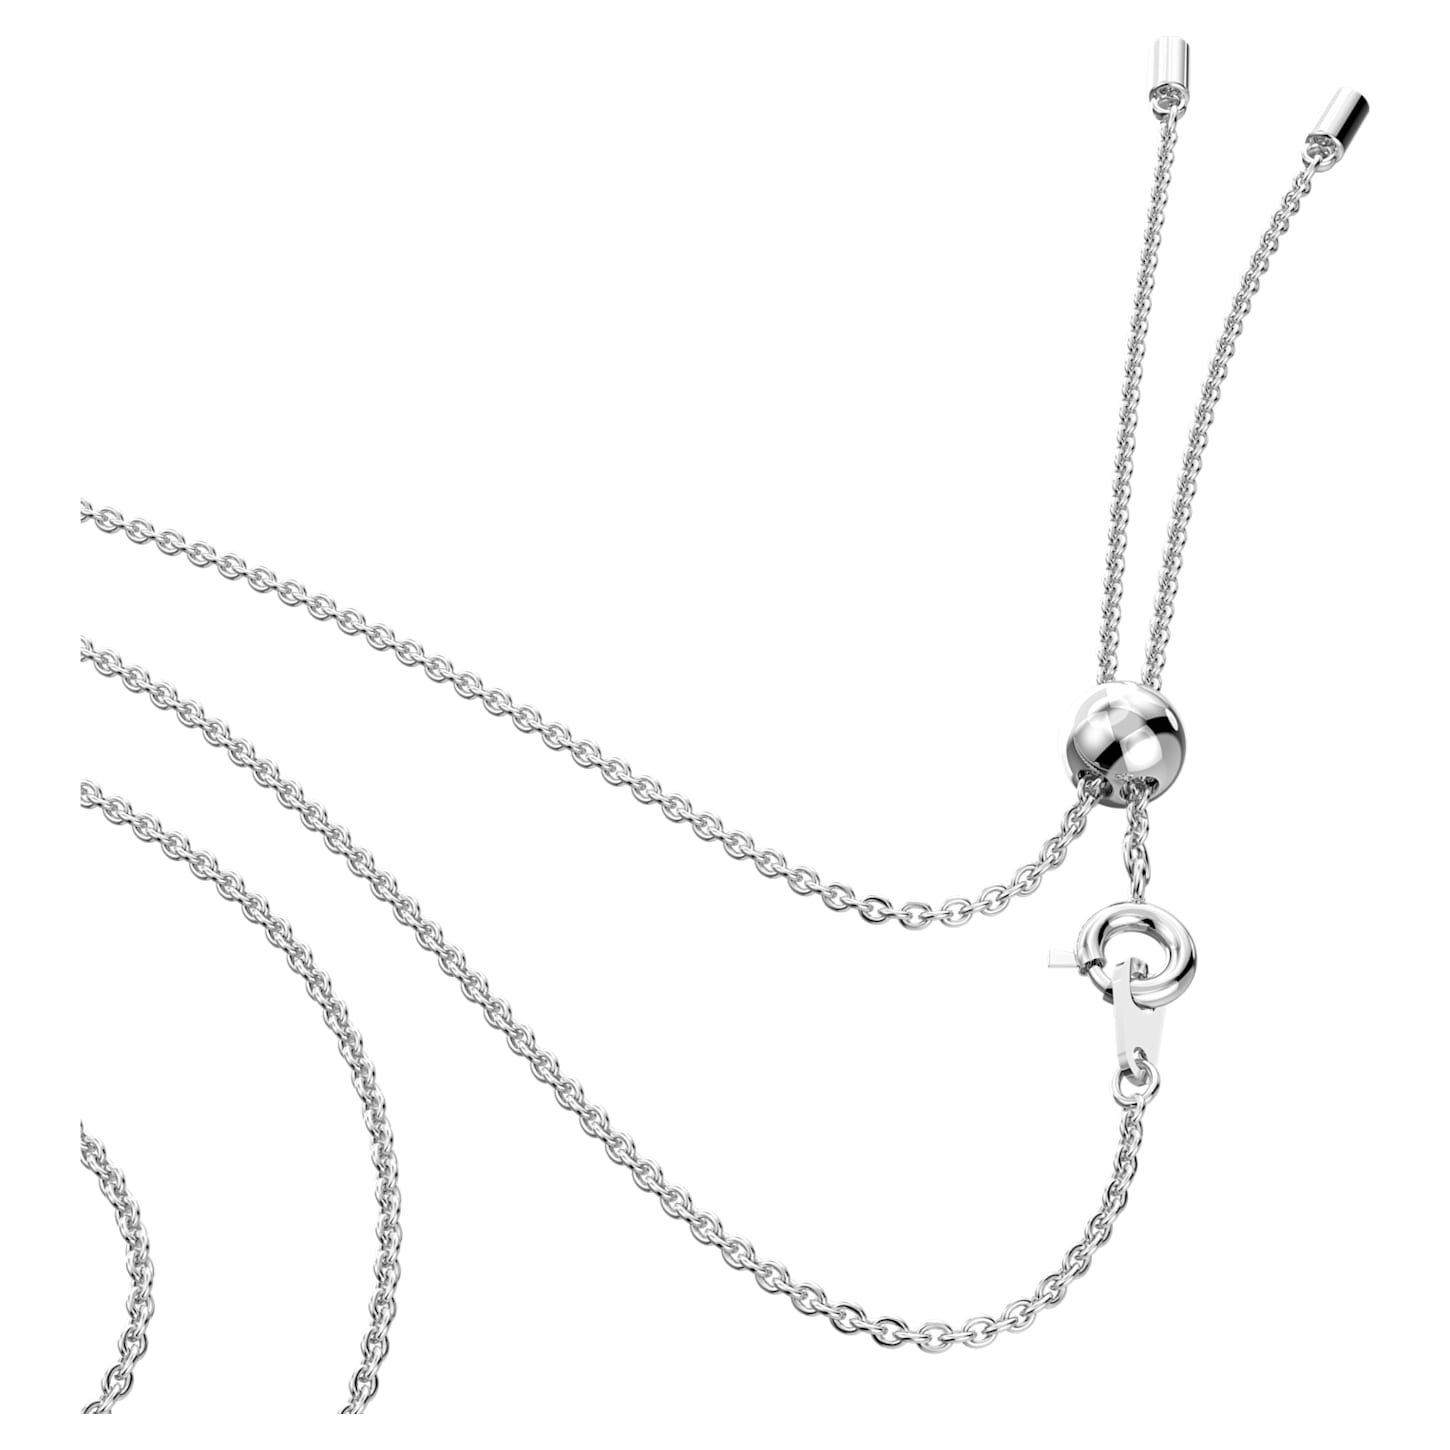 Generation - White Silver - Long Necklace - Swarovski